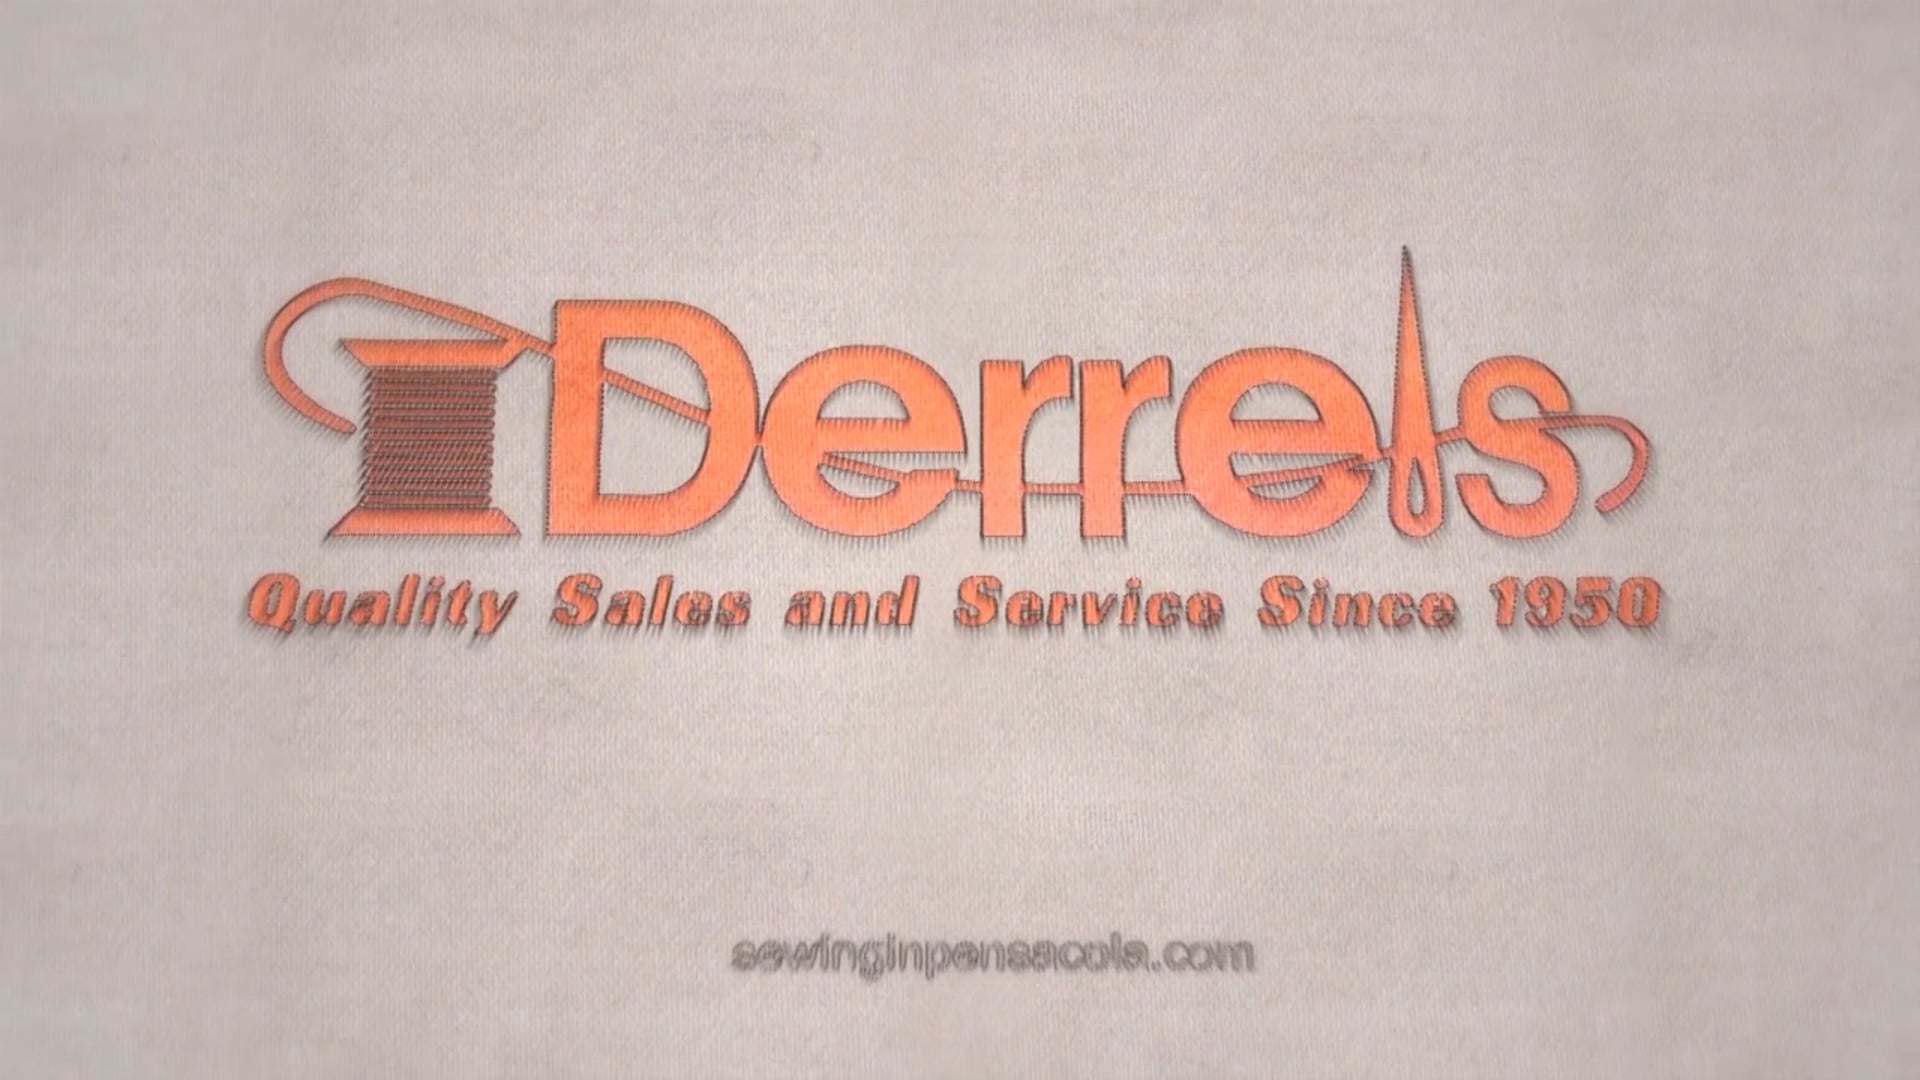 Derrel's Sewing